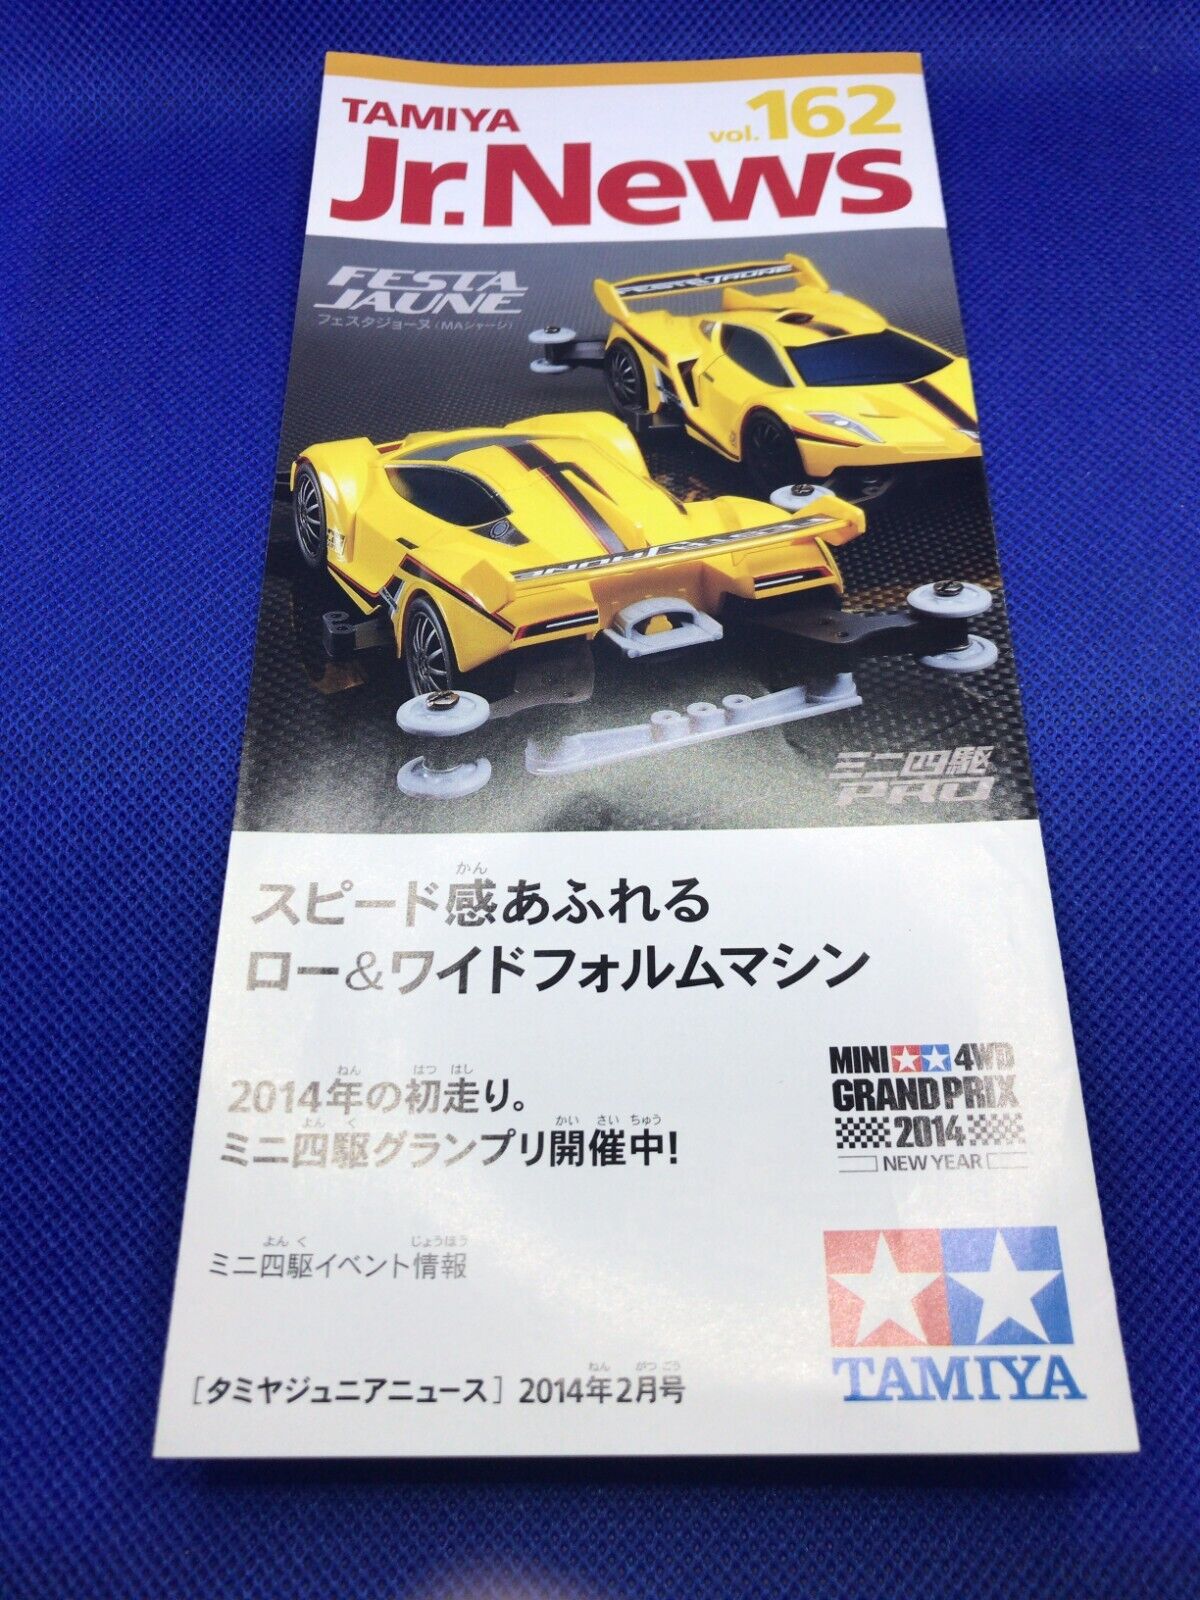 TAMIYA Jr.News vol.162 Mini 4WD FESTA JAUNE GRAND PRIX 2014 brochure Japanese